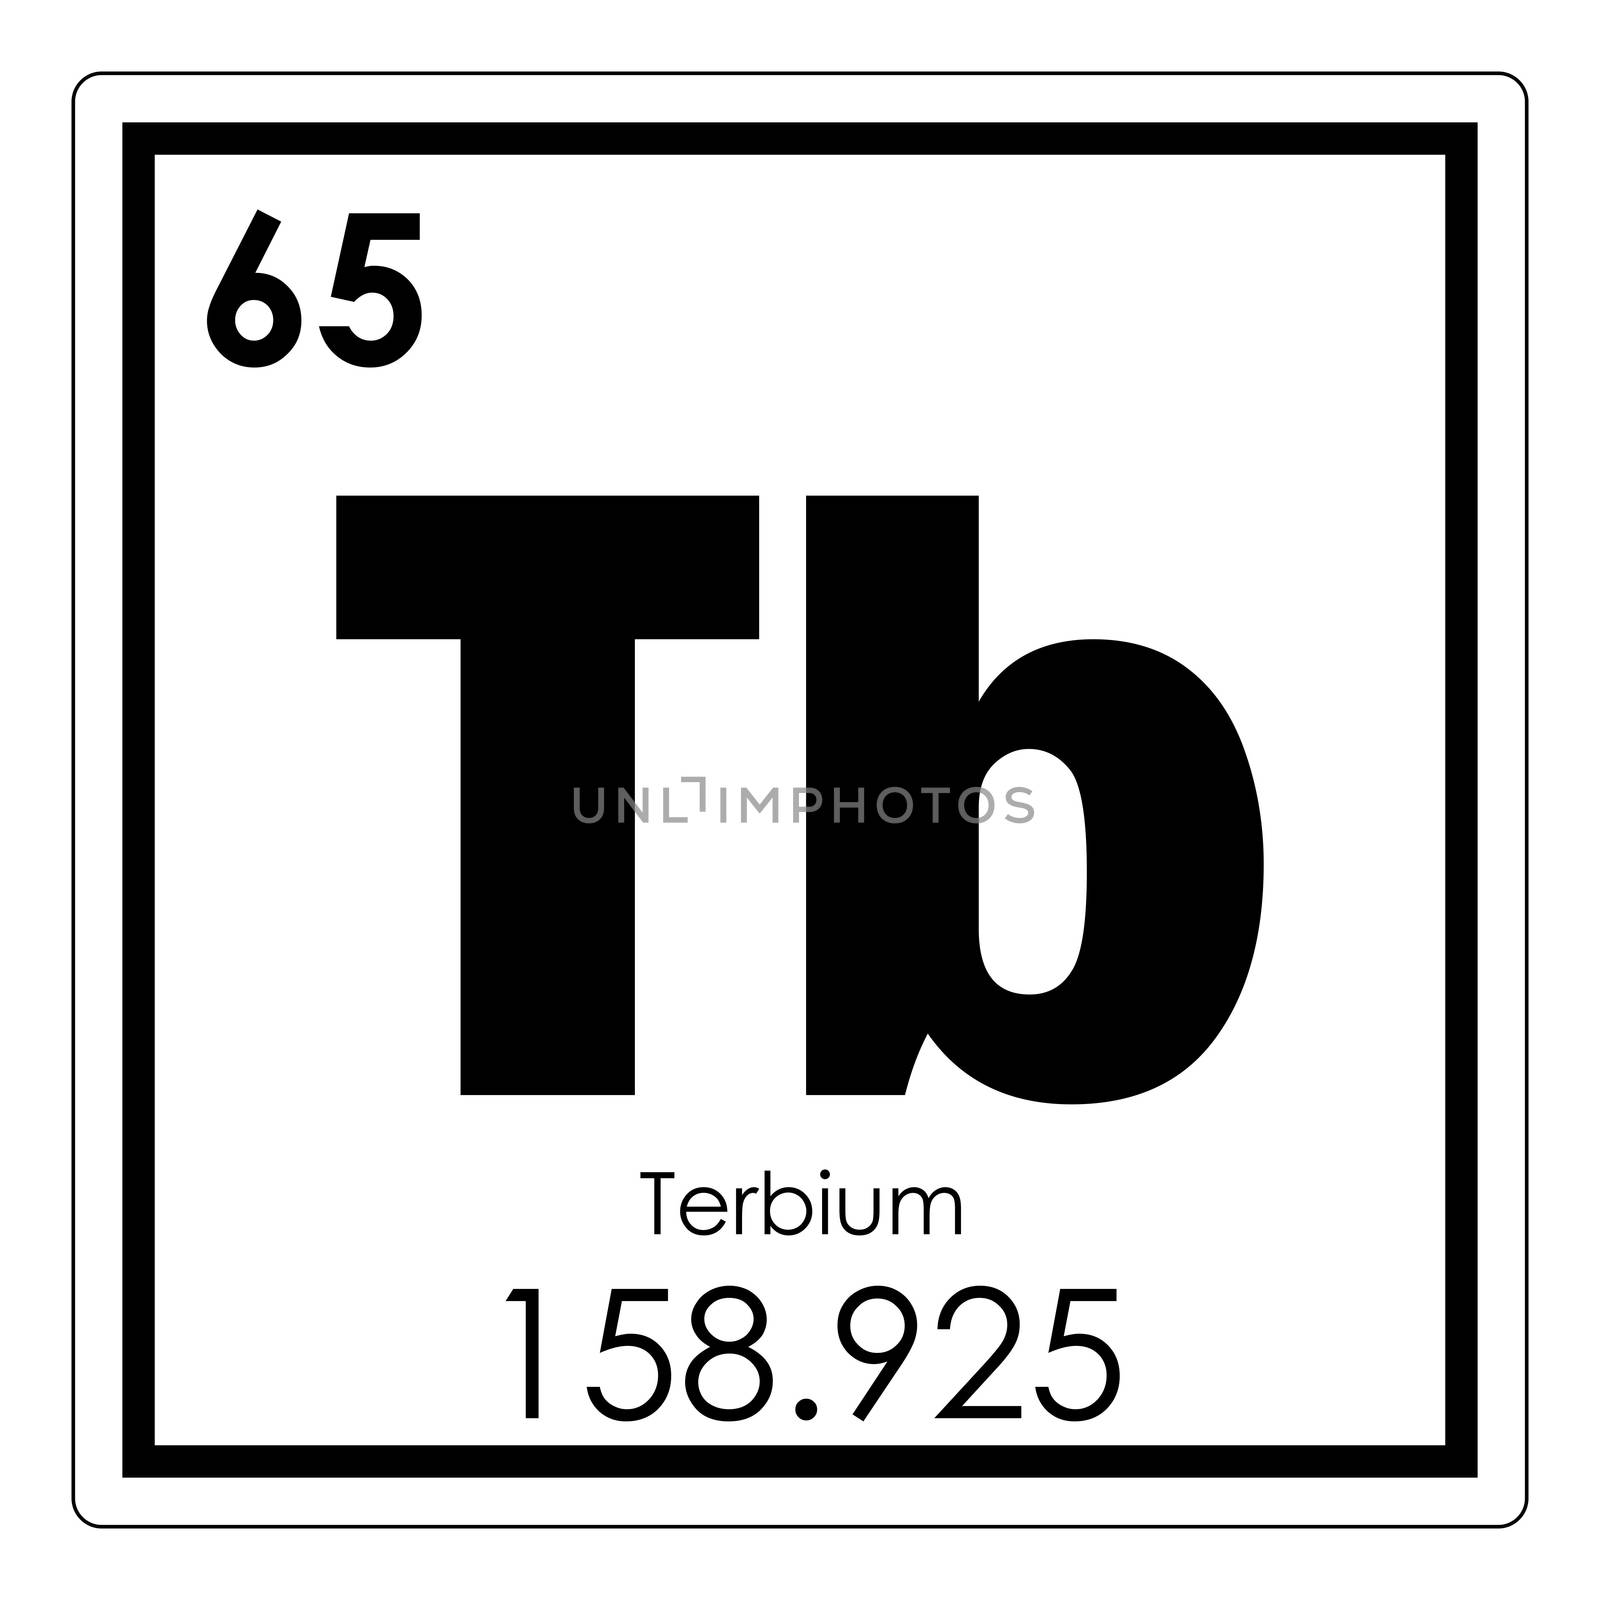 Terbium chemical element by tony4urban